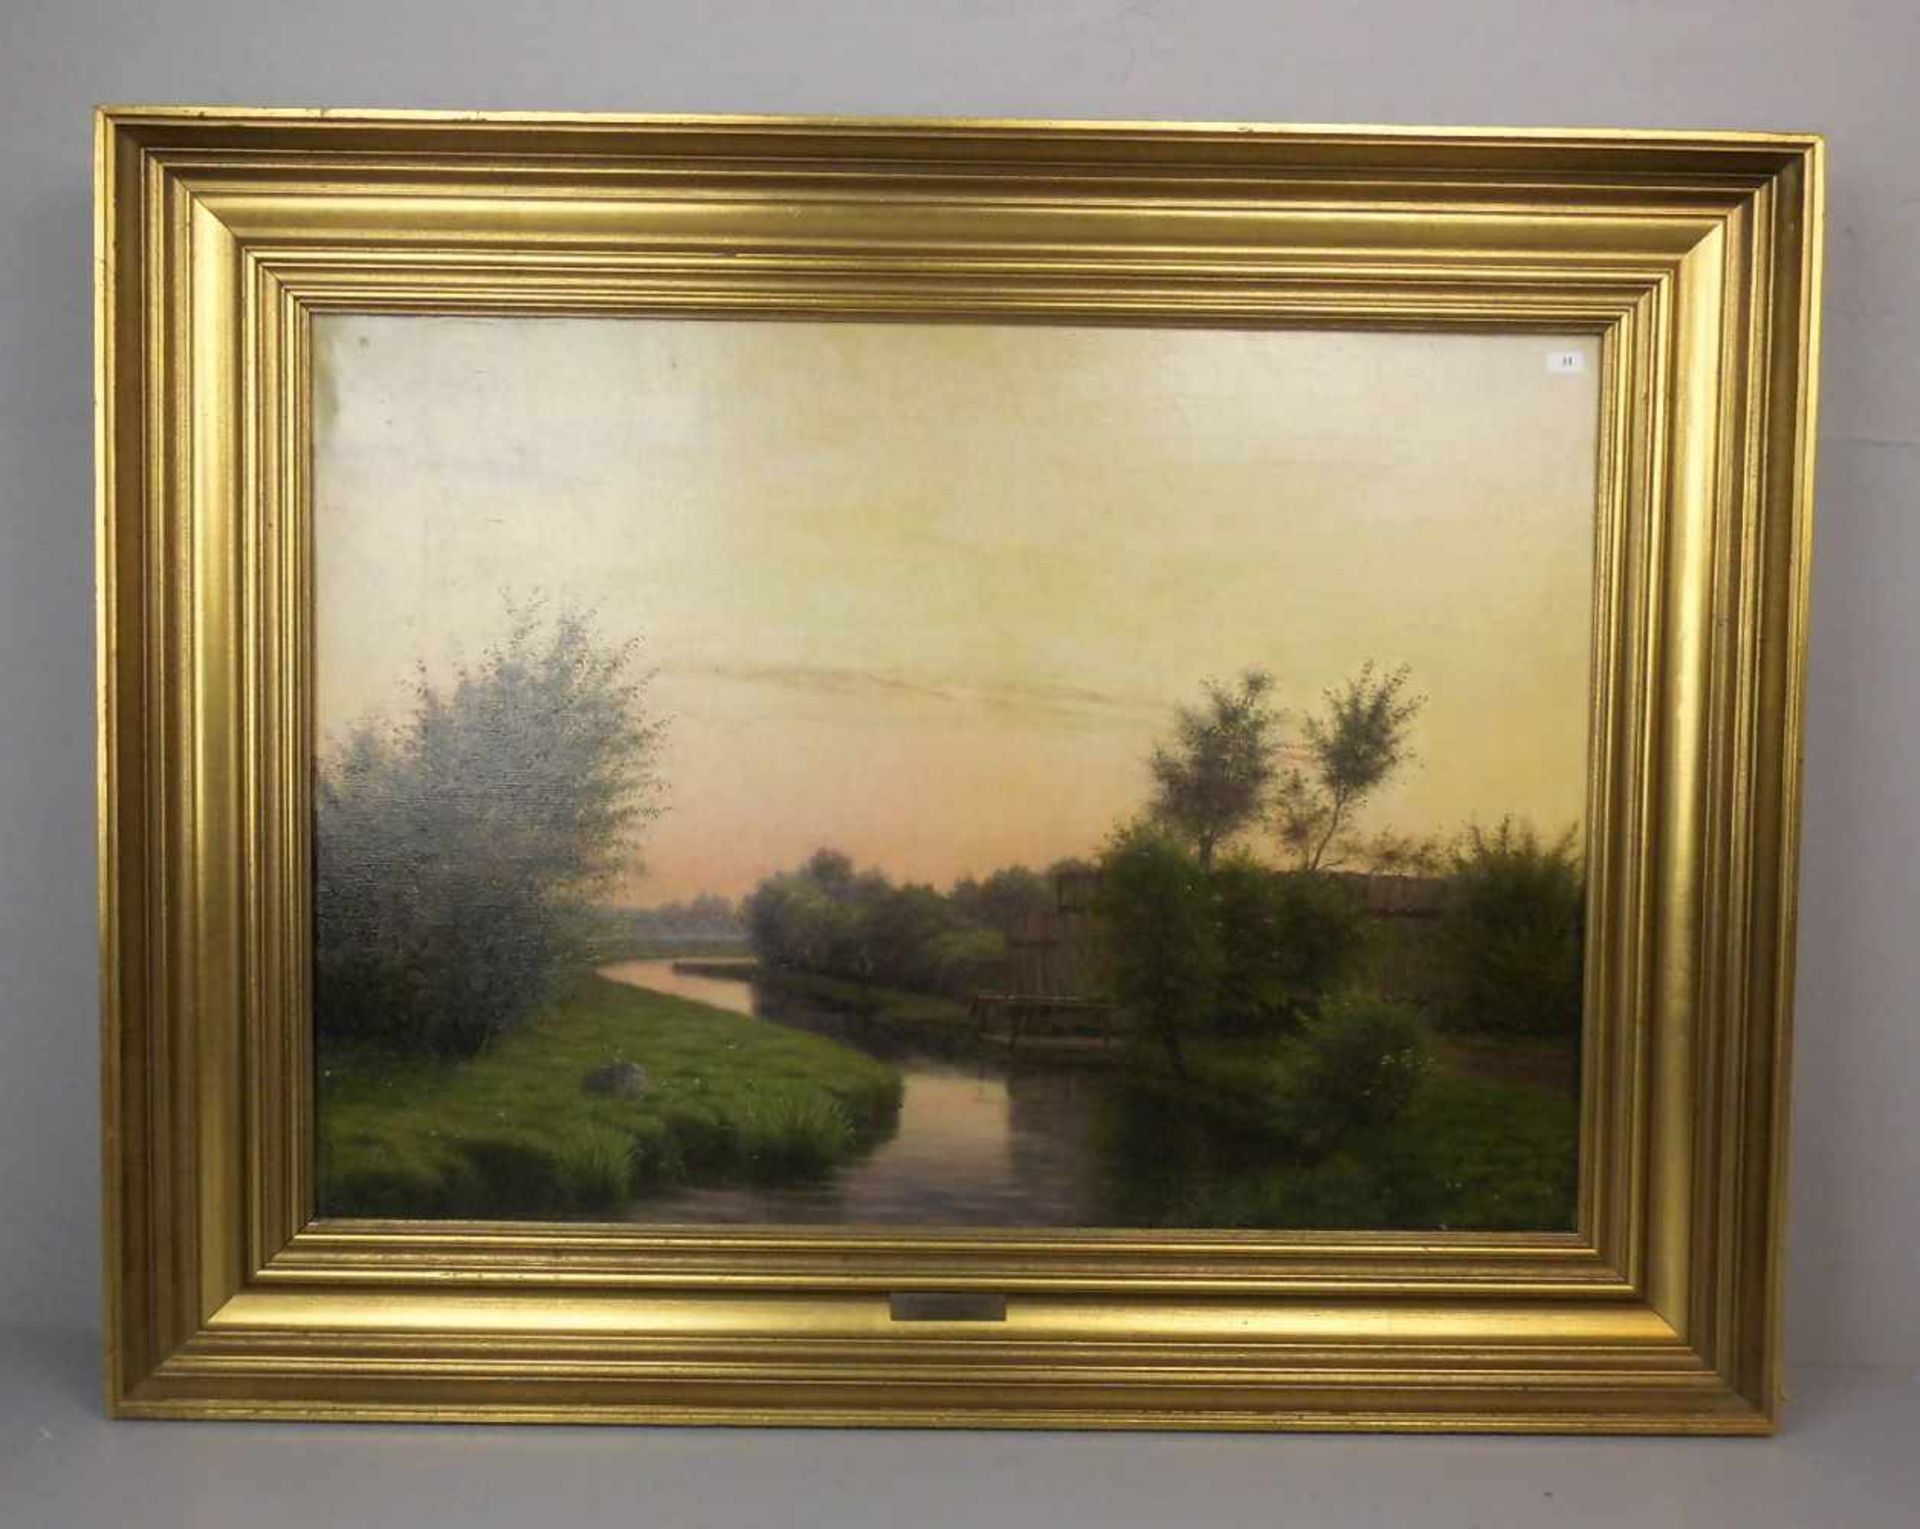 FOSS, HARALD FREDERIK (Fredericia, Dänemark 1843-1922 ebd.), Gemälde / painting: "Flusslandschaft